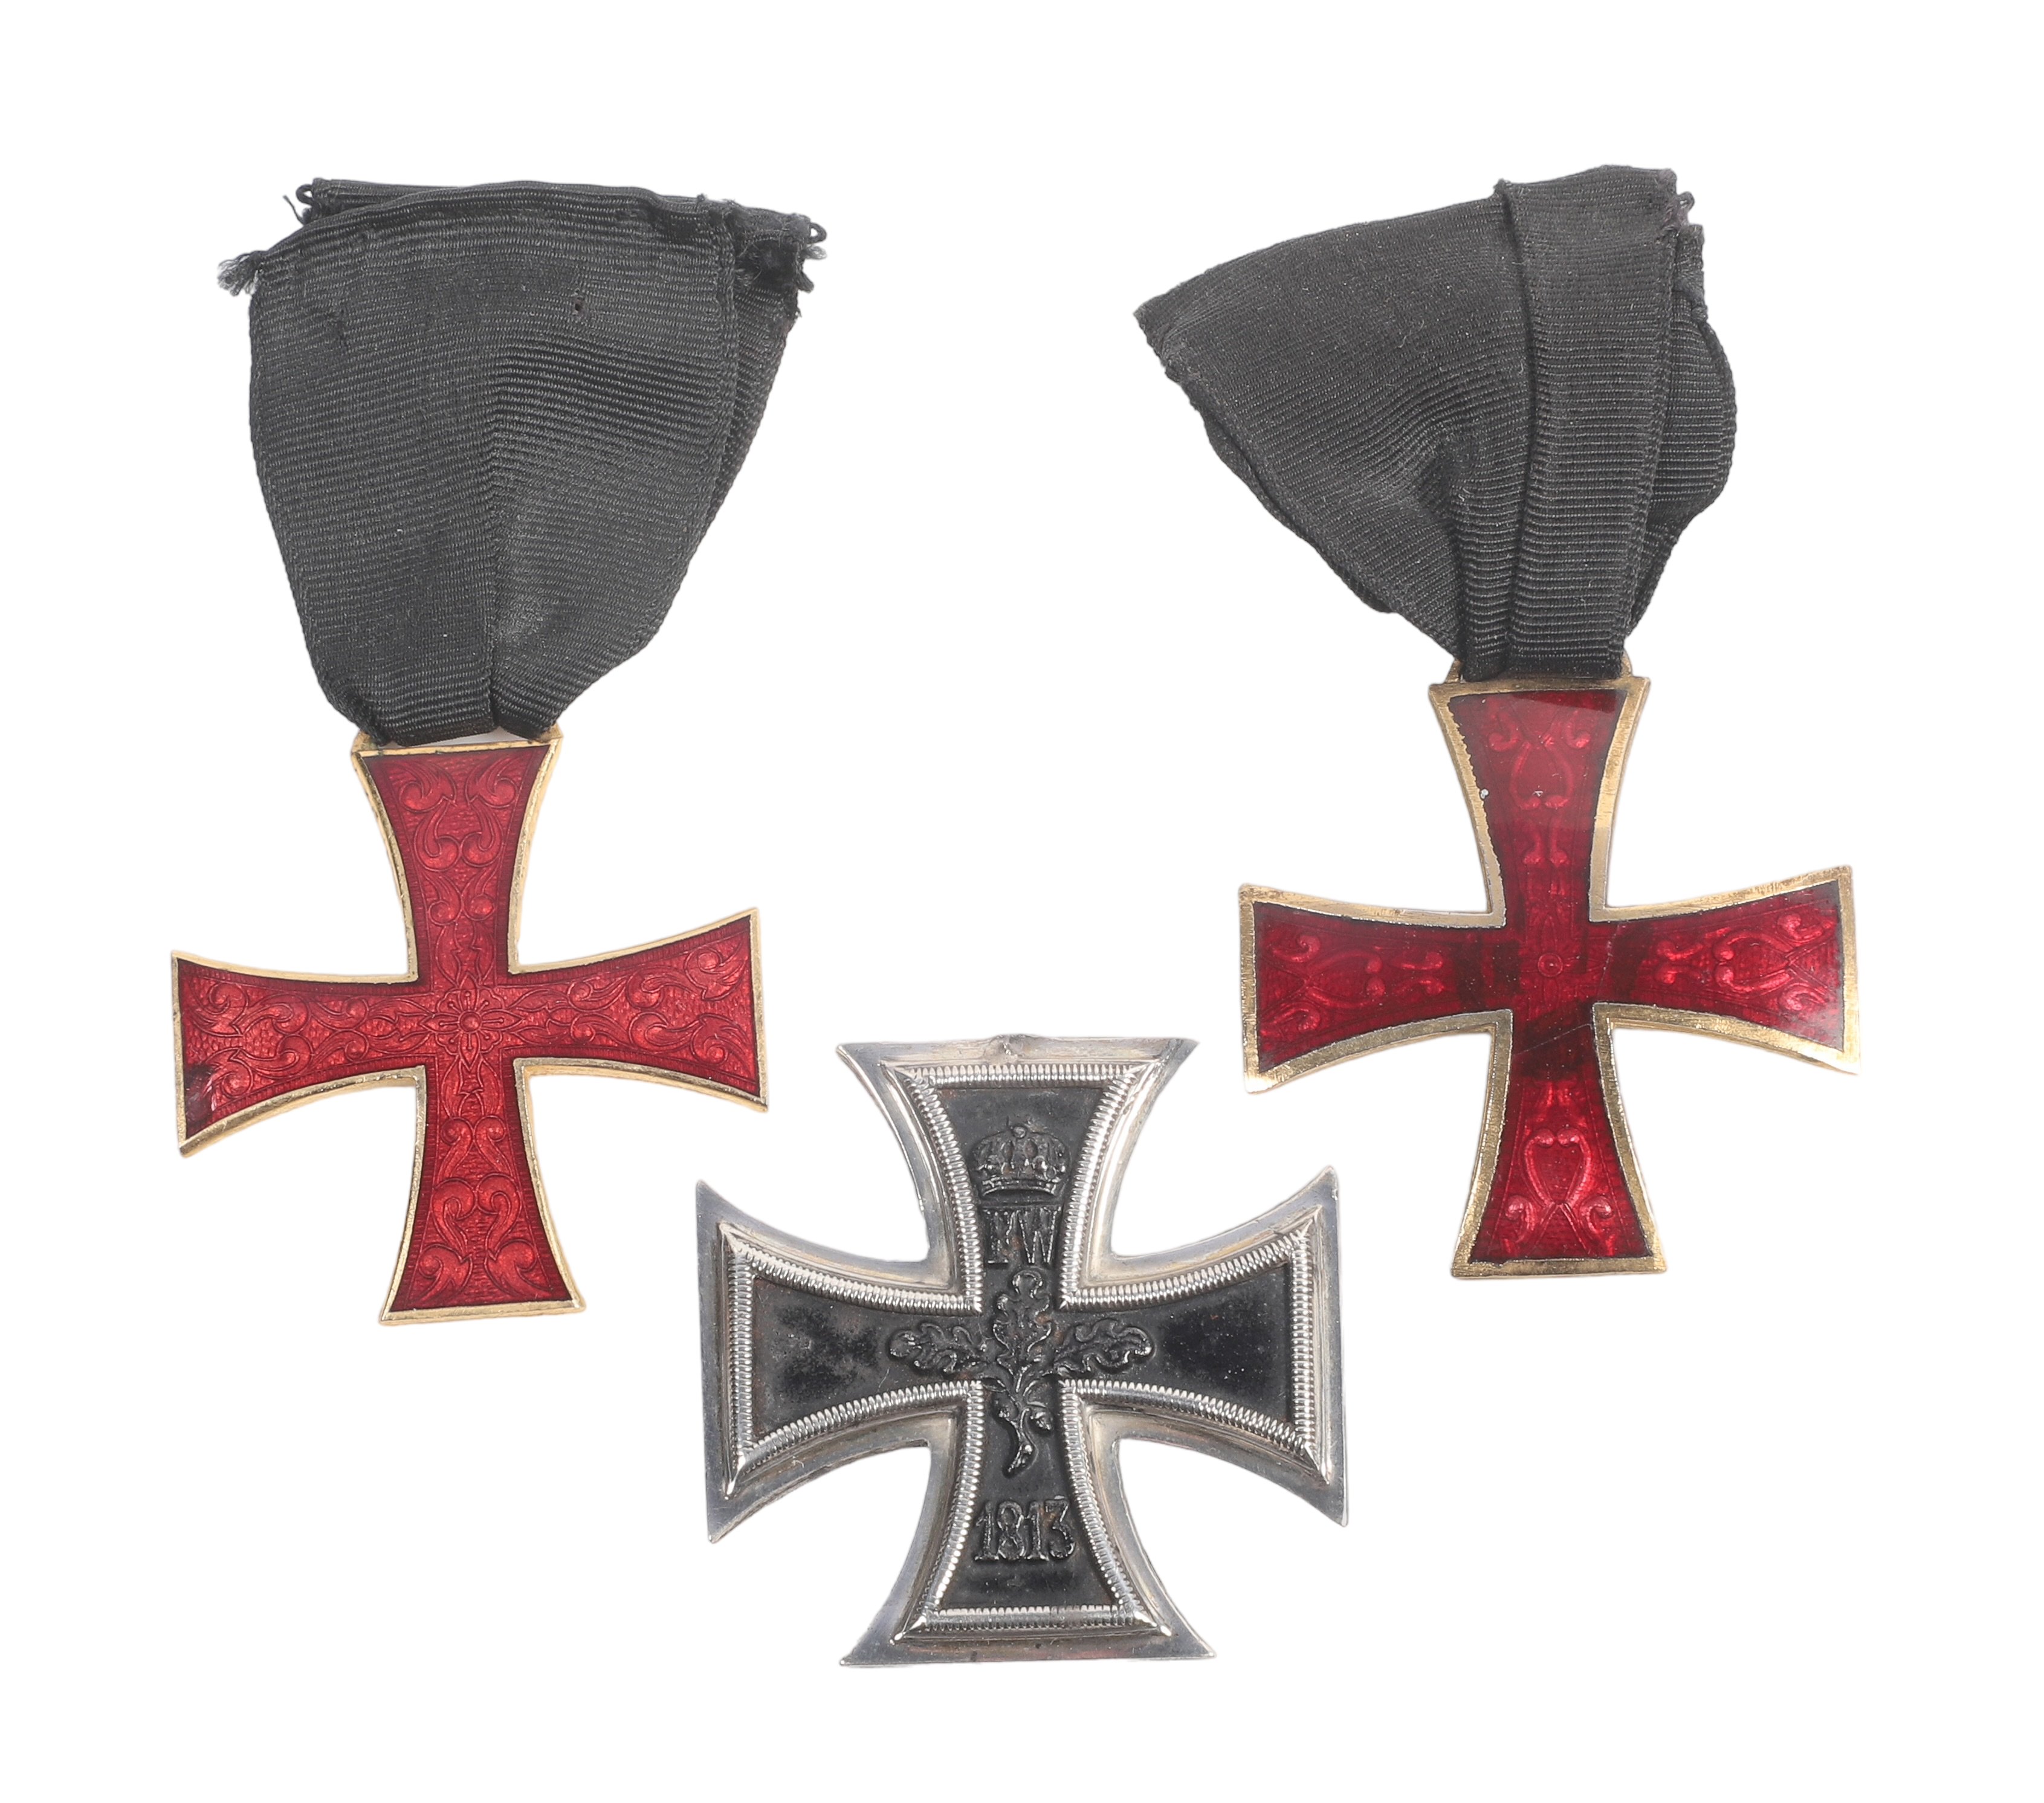  3 German iron cross medals c o 2e1555